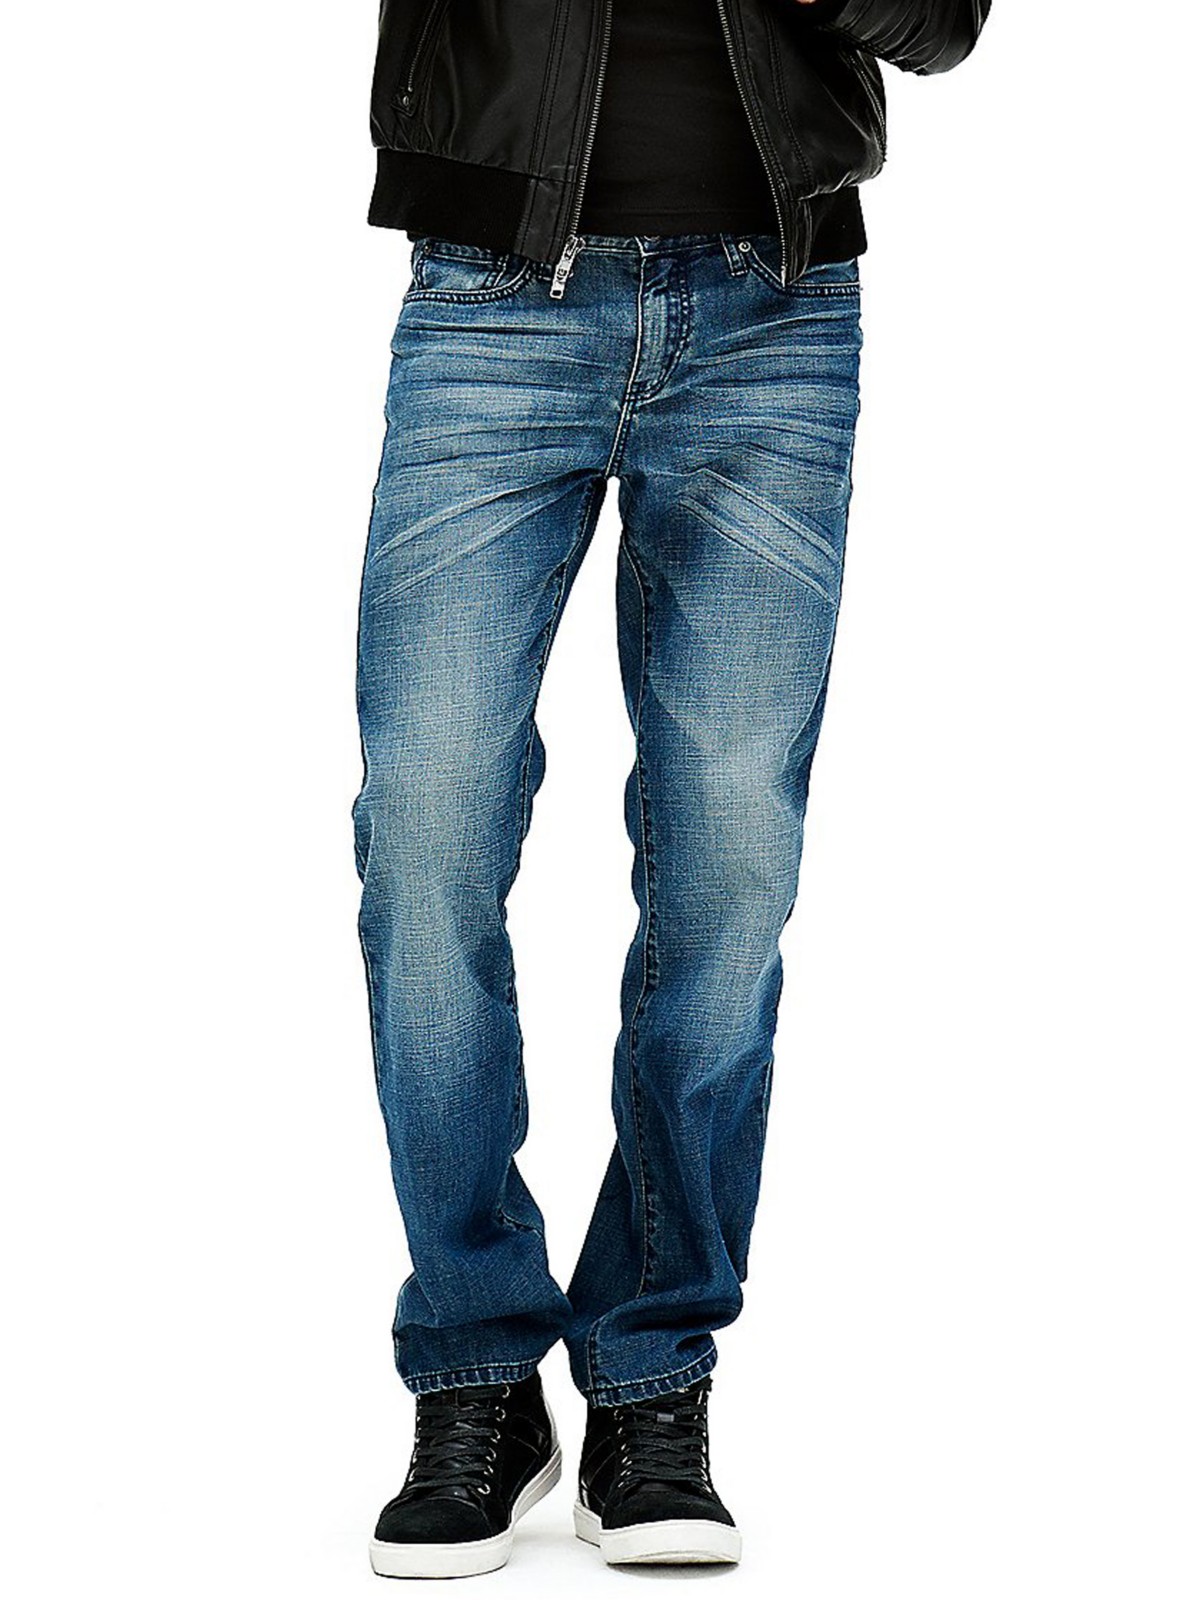 GUESS Men's Delmar Slim Straight Jeans in Medium Wash | eBay